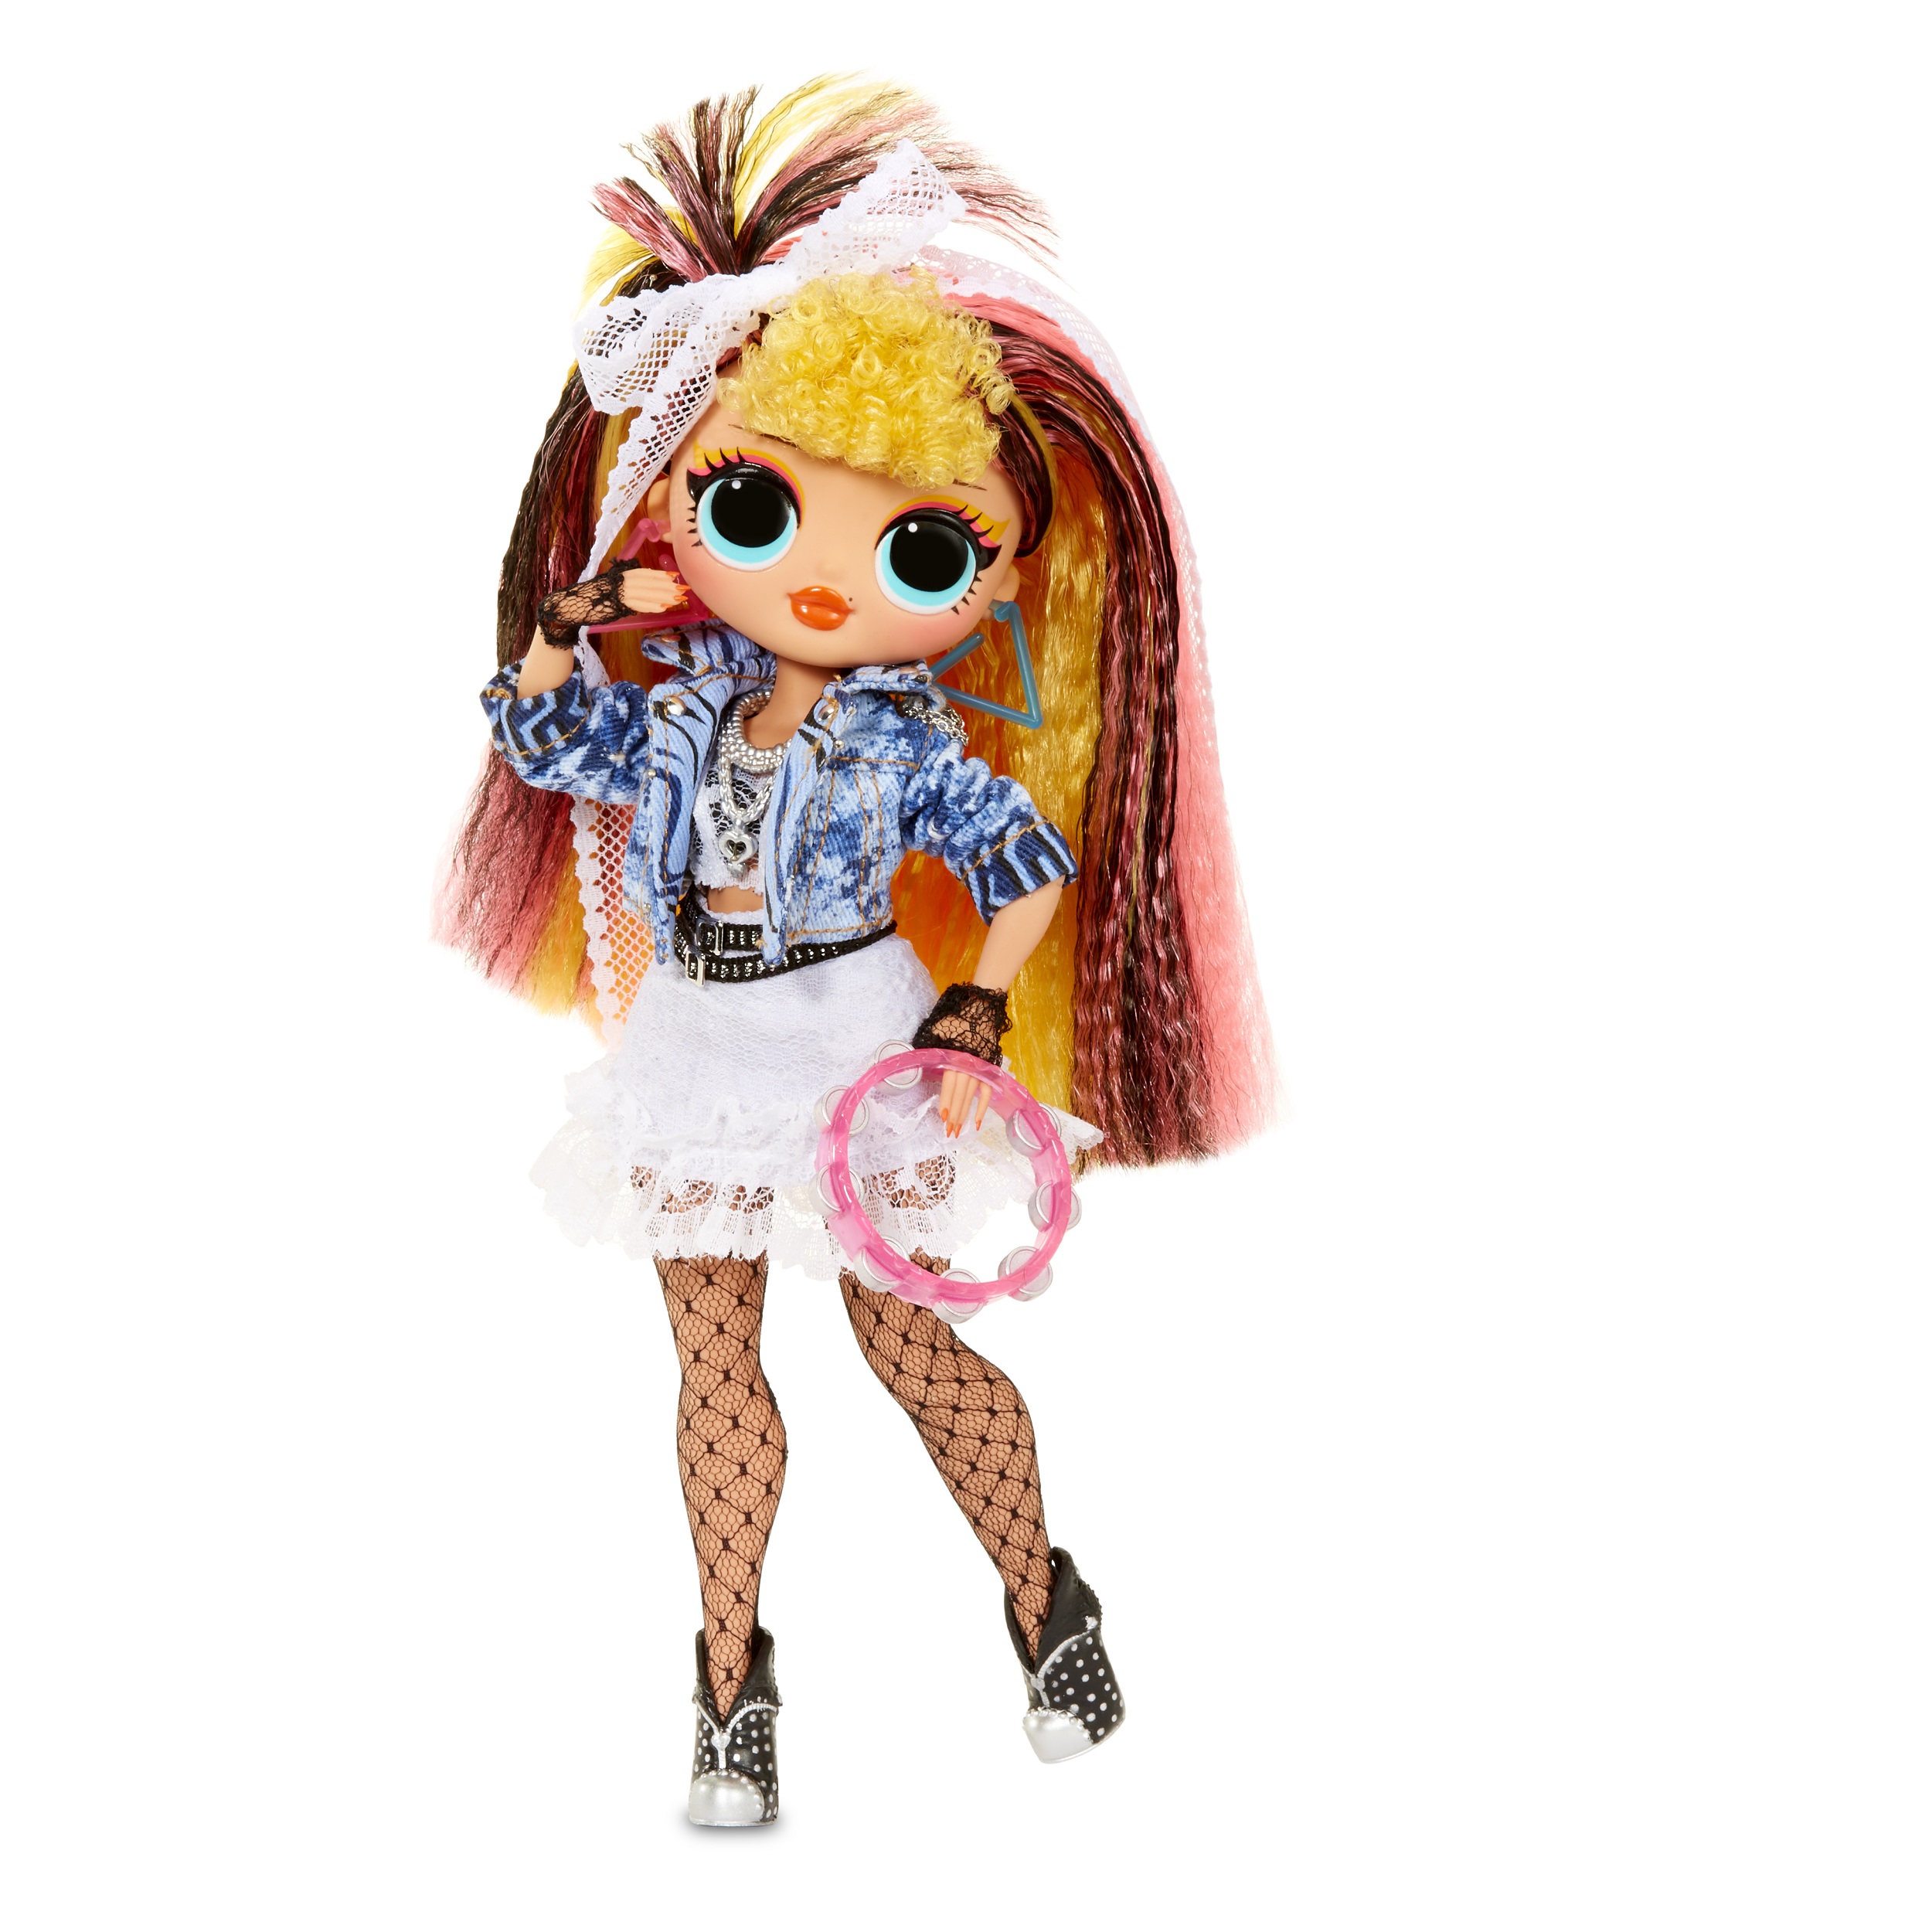 4 LOL Surprise REMIX OMG Fashion Dolls Kitty K LONESTAR Pop BB Honeylicious NEW